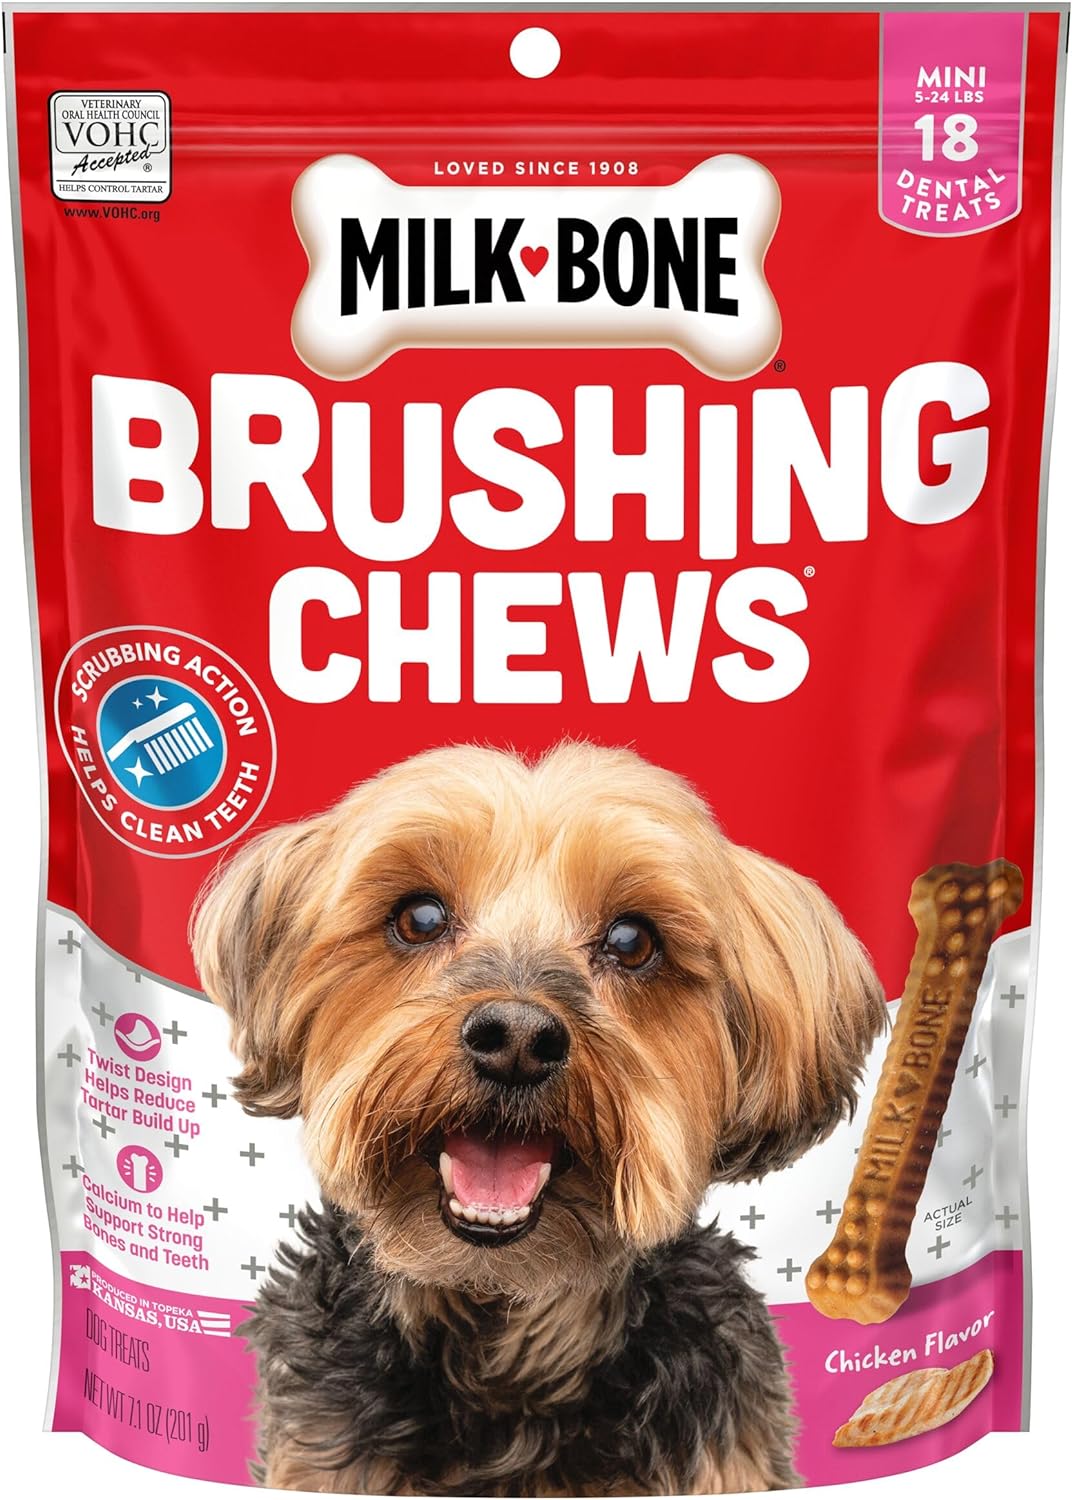 Milk-Bone Original Brushing Chews, 18 Mini Daily Dental Dog Treats (Pack of 5) Scrubbing Action Helps Clean Teeth